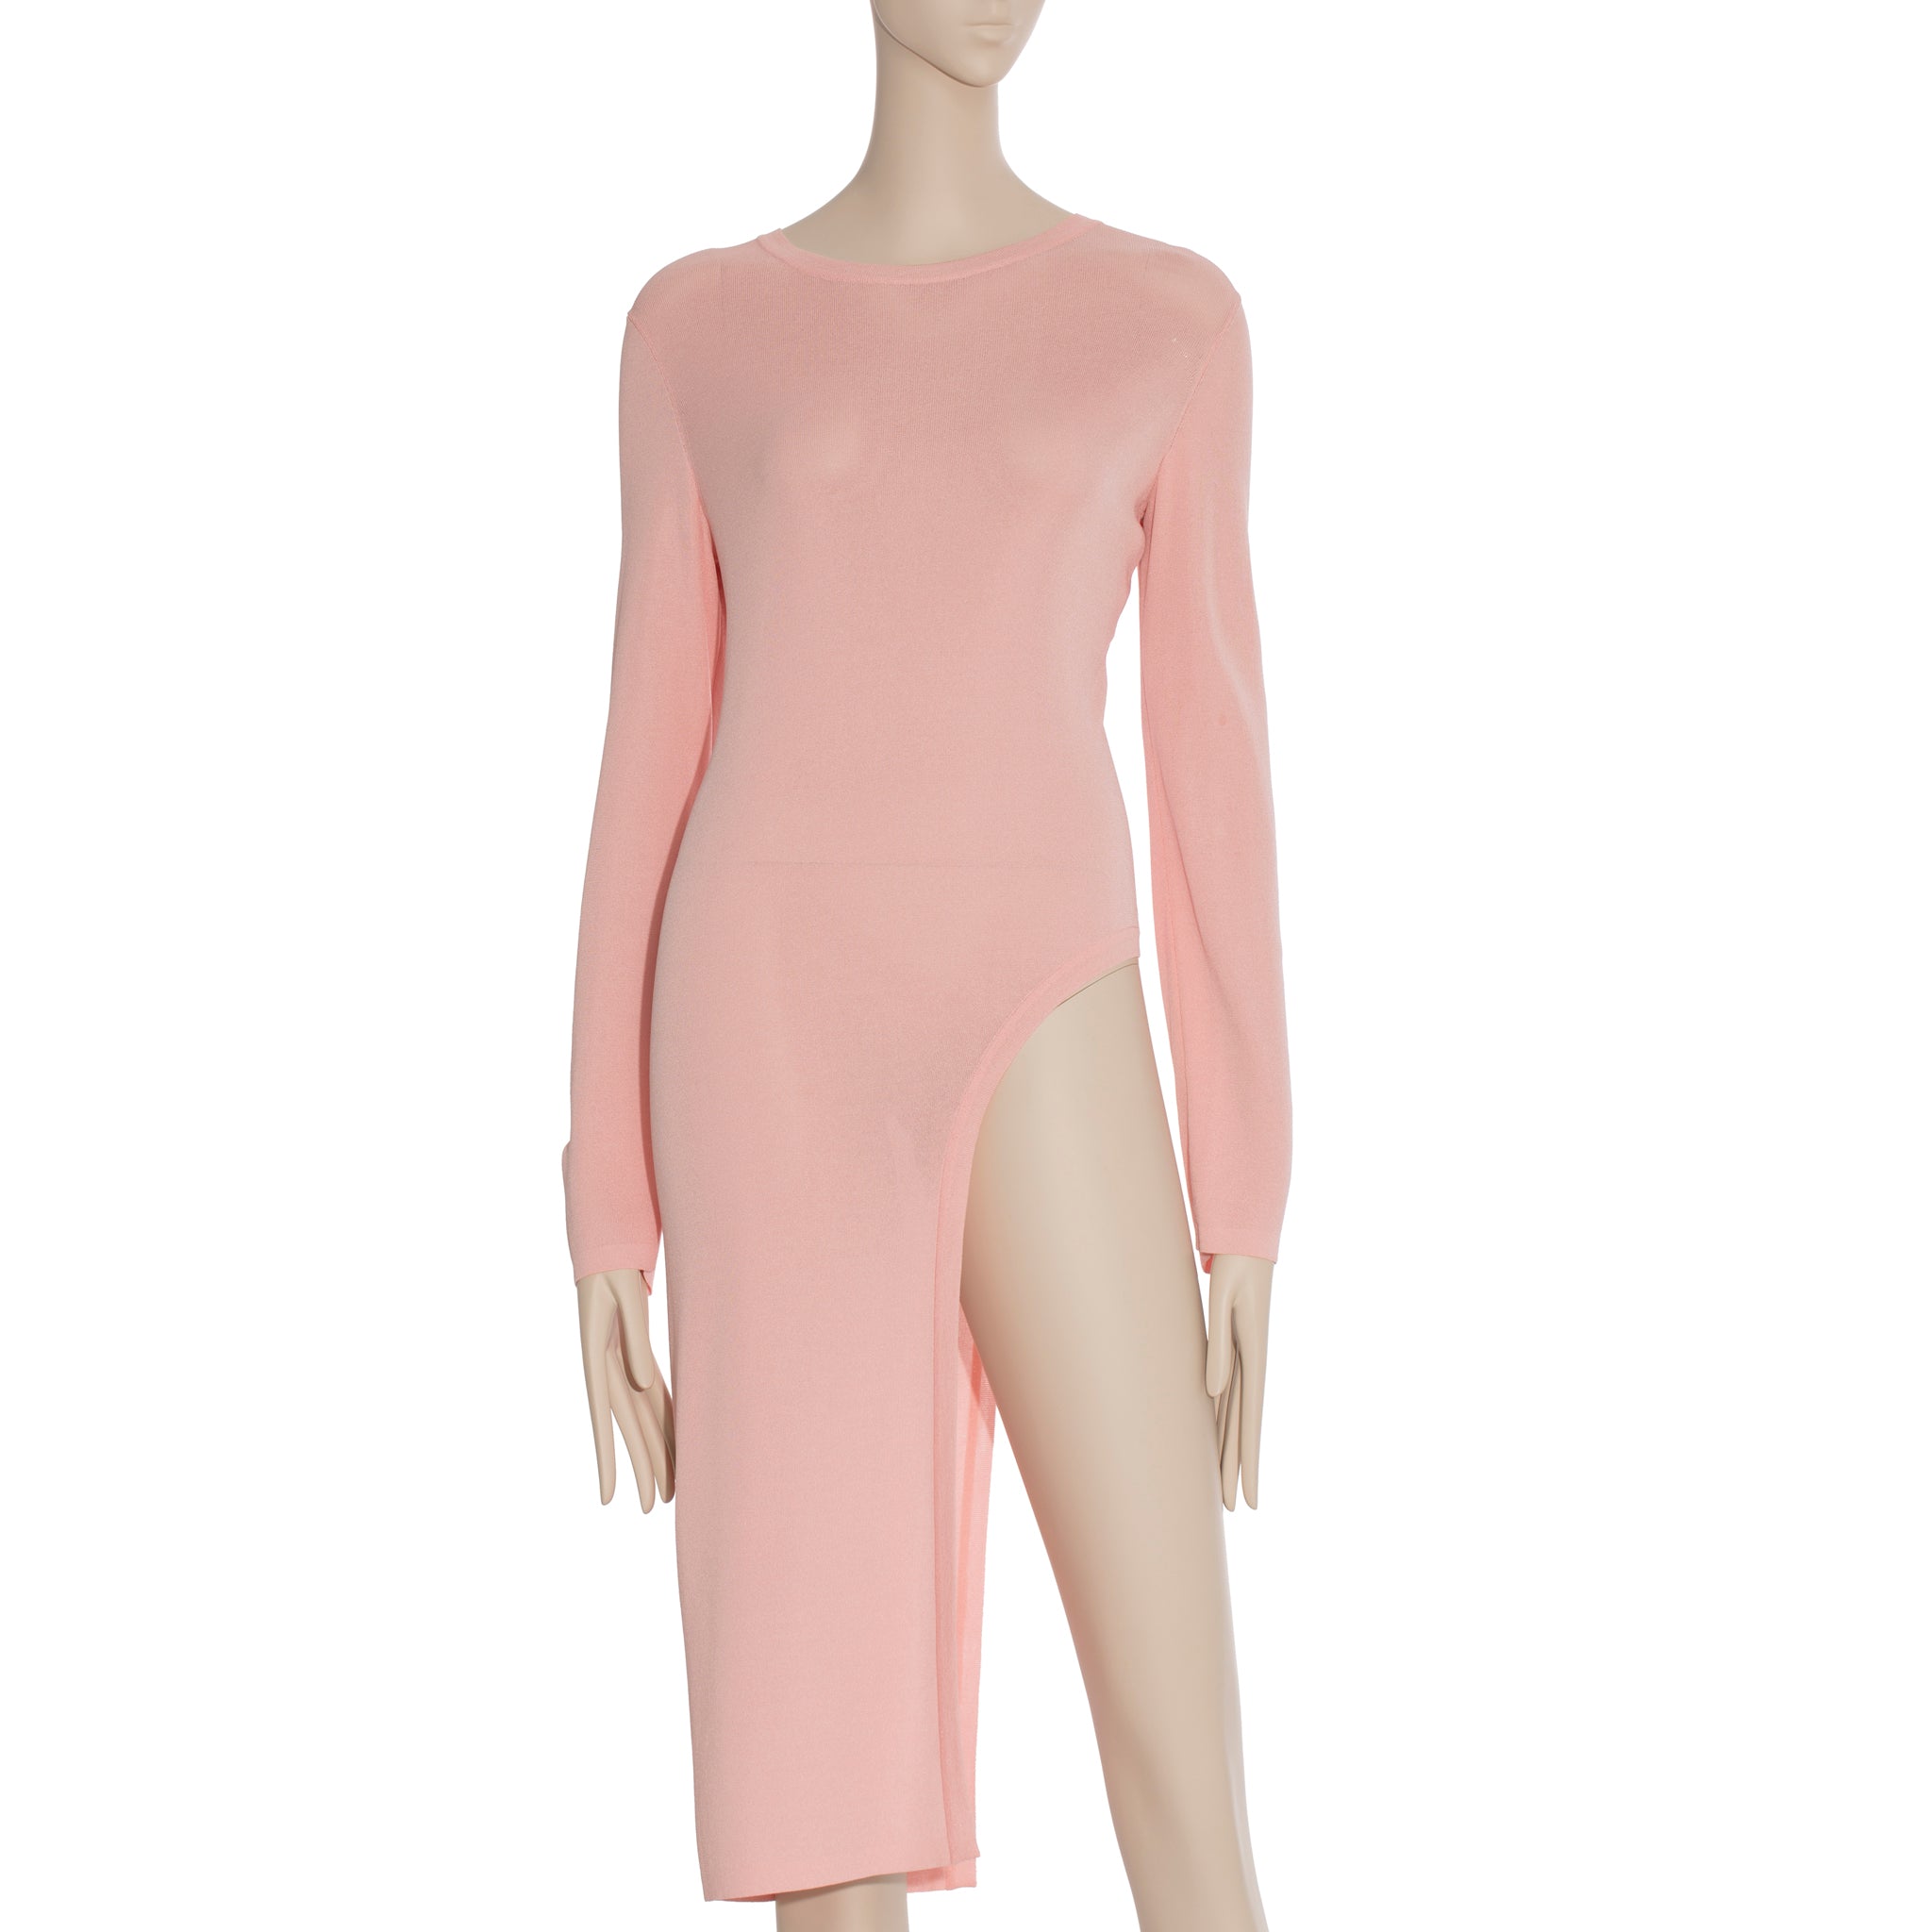 Chanel Knit Pink Long Sleeve Dress/Top 40 FR